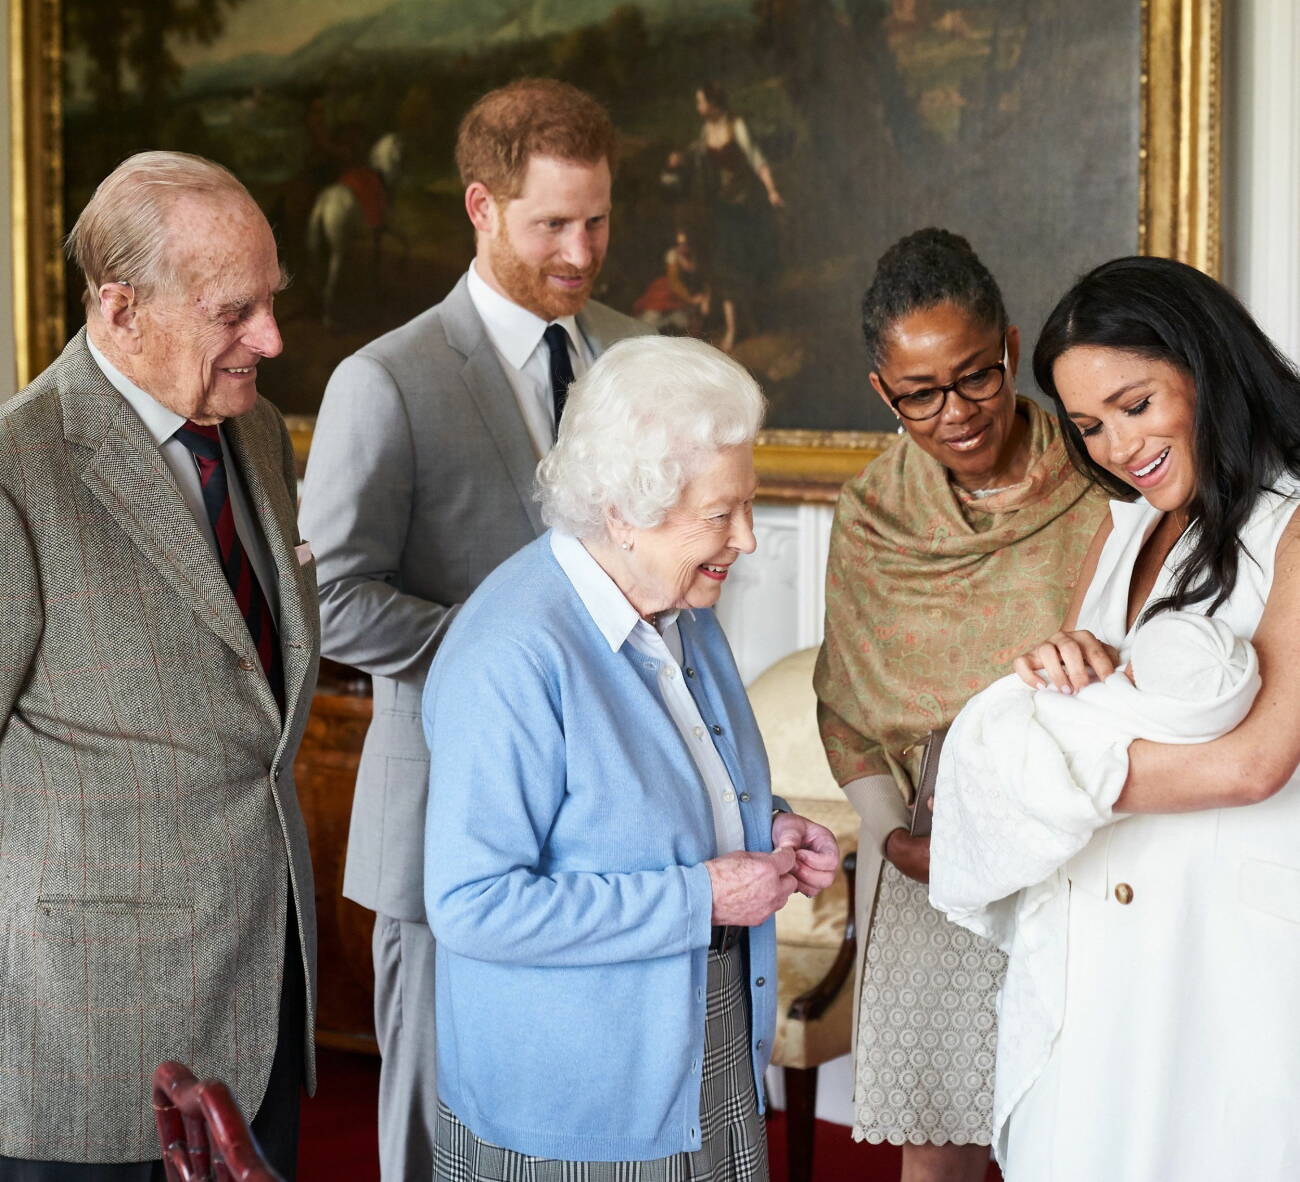 Drottning Elizabeth Prins Philip Prins Harry Meghans mamma Doria Ragland Meghan Markle Archie Windsor-Mountbatten